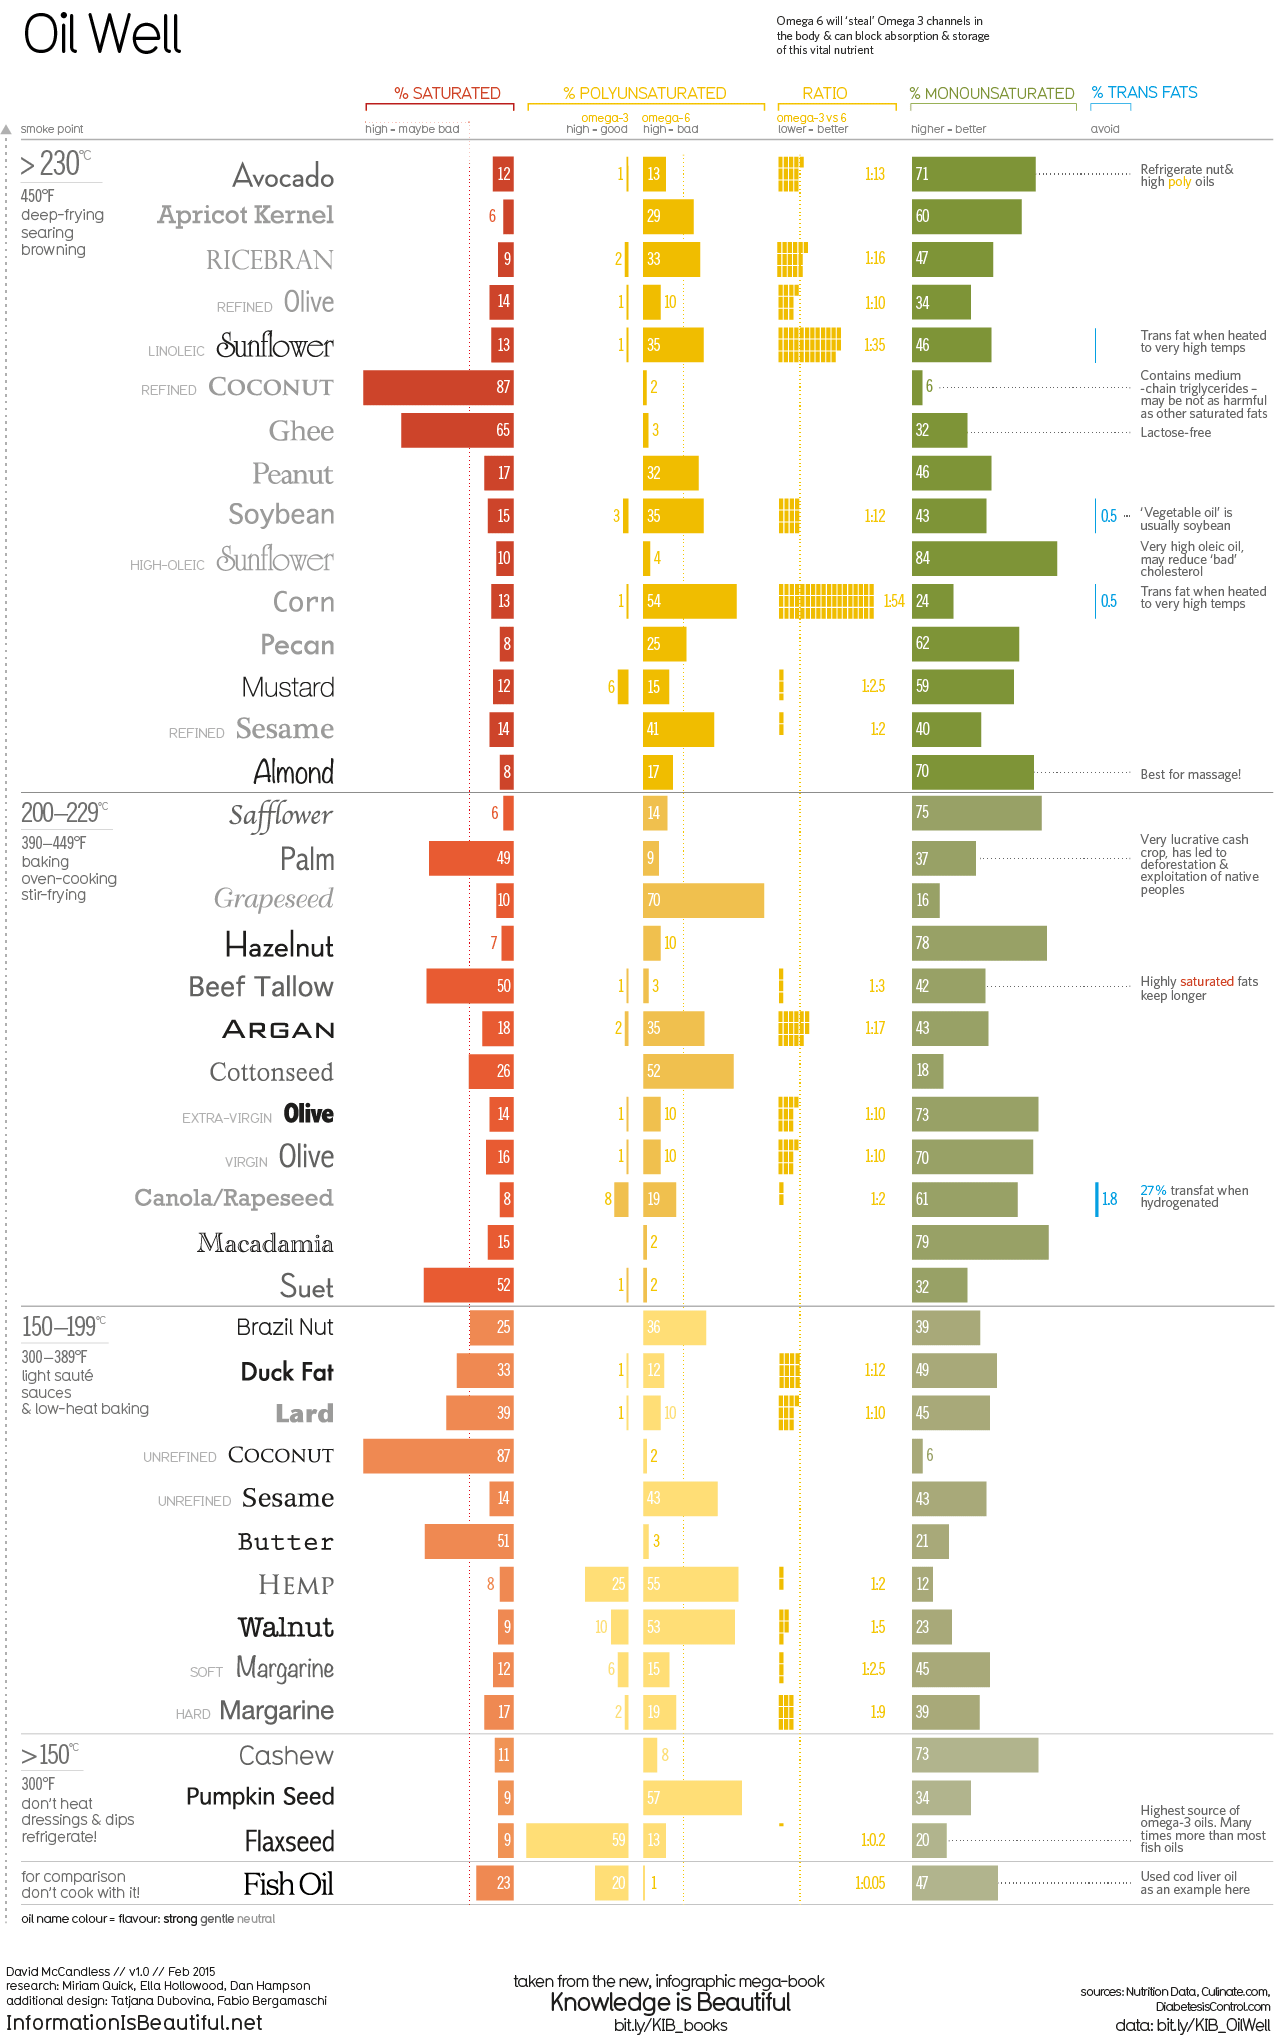 Cooking Oil Fat Comparison Chart